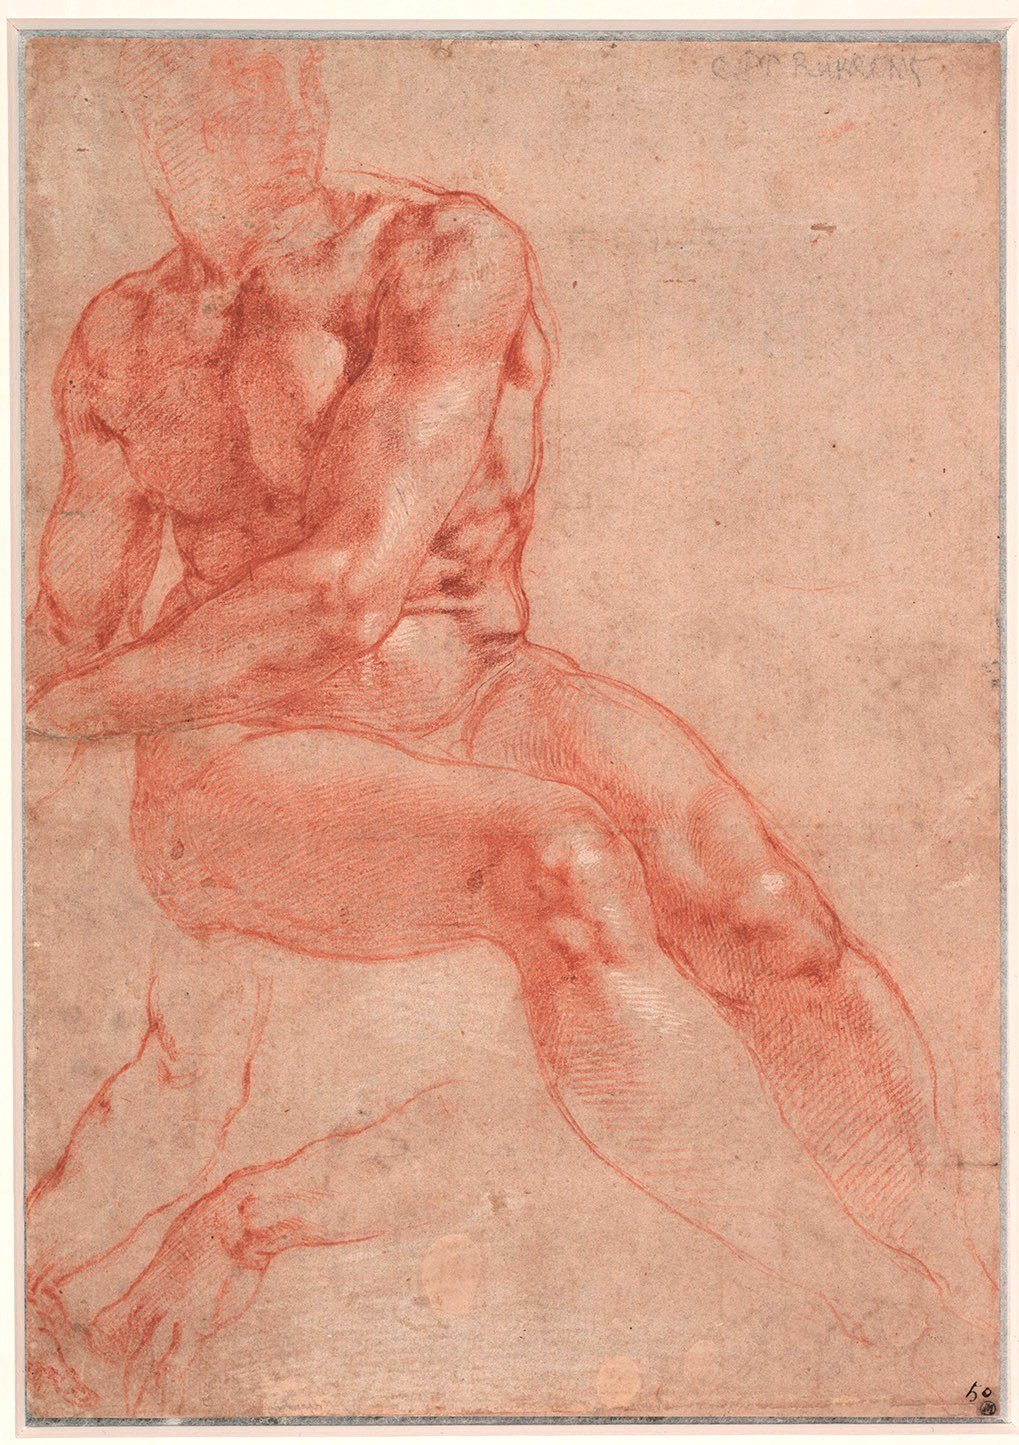 Michelangelo Buonarroti, Studio di nudo (recto), circa 1510-11, 27,2 x 19,2 cm, Albertina, Vienna. © Albertina, Vienna. Courtesy National Gallery